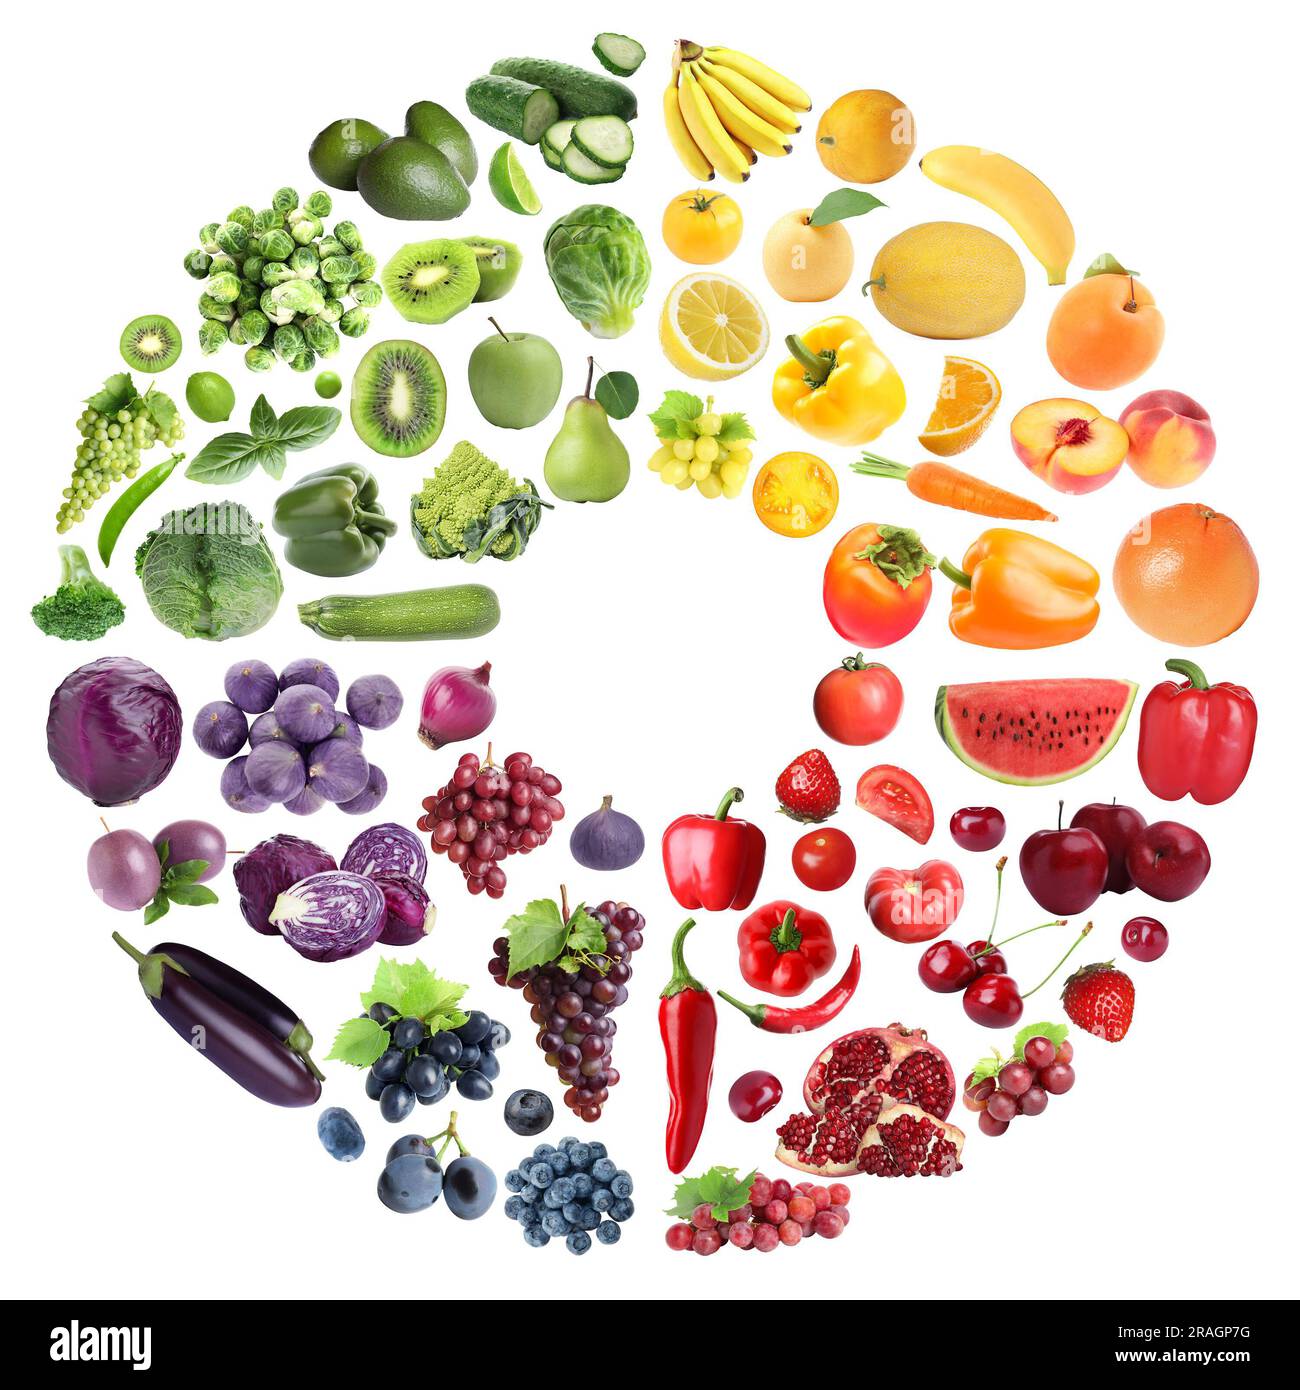 https://c8.alamy.com/comp/2RAGP7G/doughnut-shape-made-of-many-fresh-fruits-and-vegetables-arranged-in-rainbow-colors-2RAGP7G.jpg